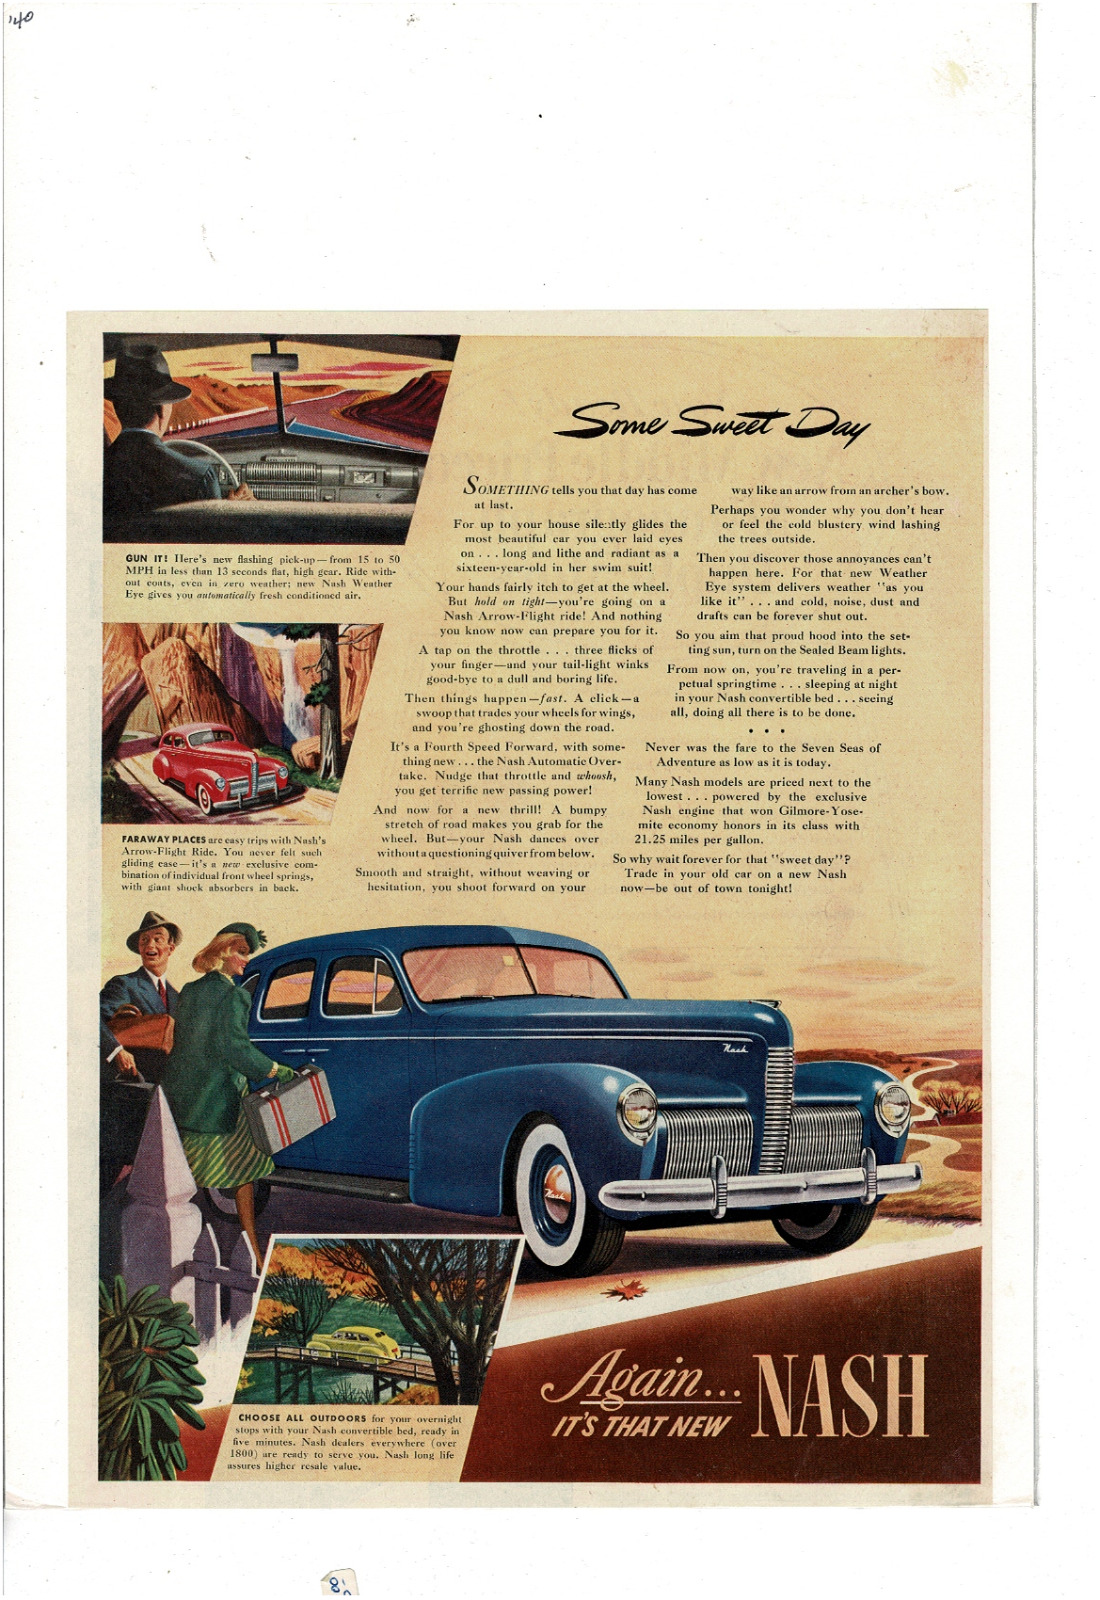 1940 Nash 4-door Sedan Arrow-flight Ride Convertible Bed Heated  Ad Print F001